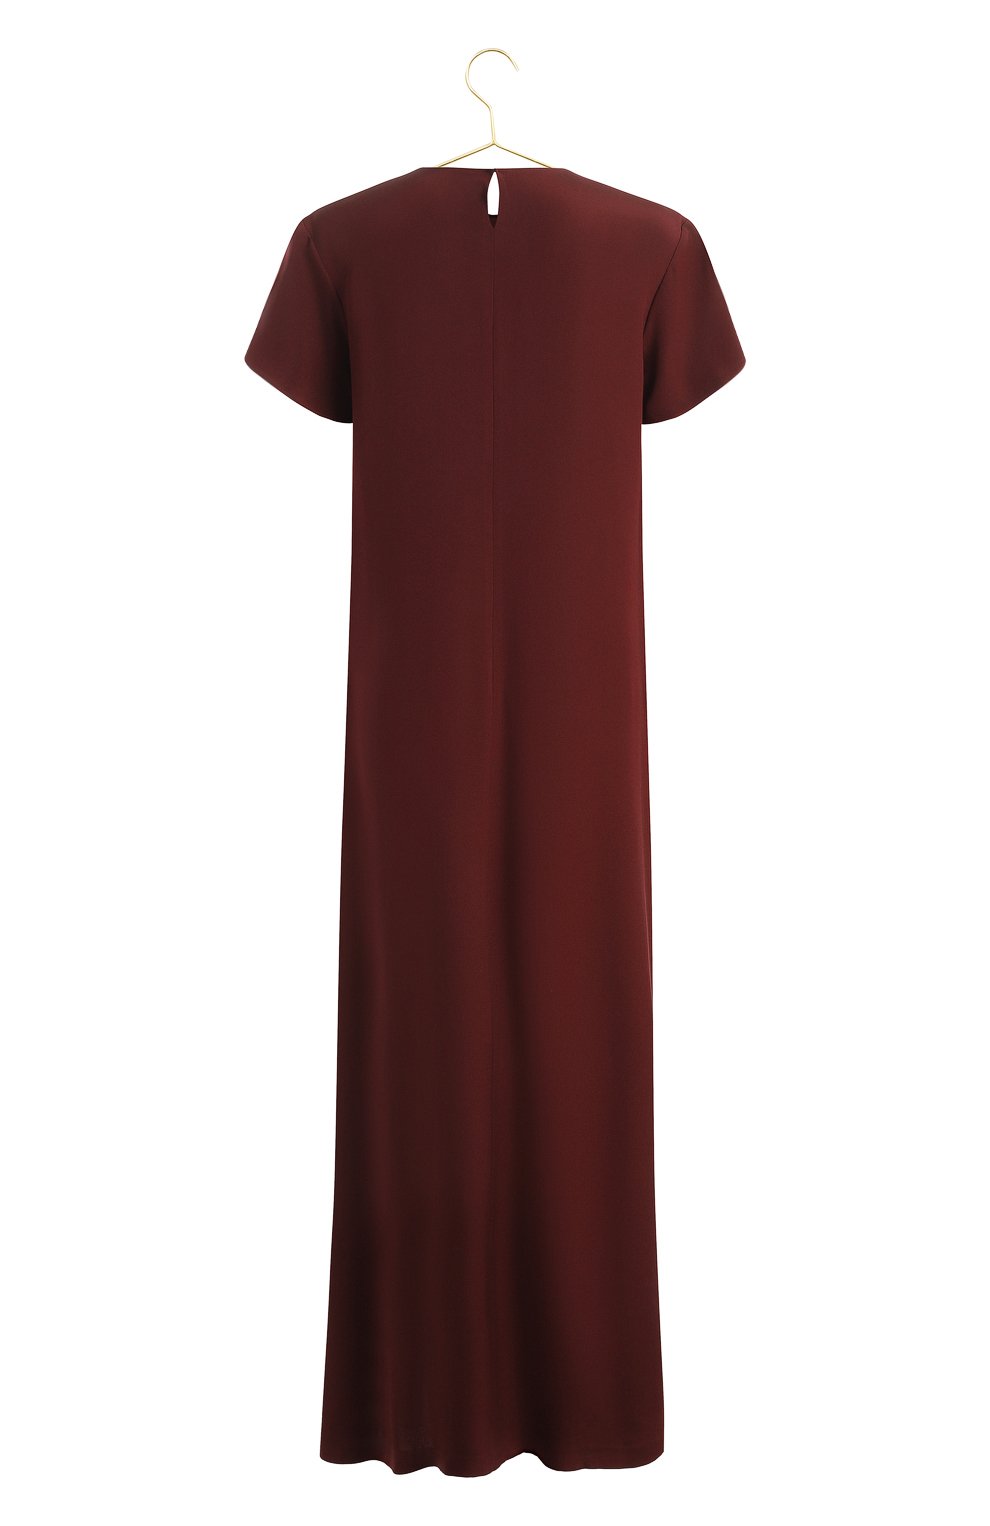 Шелковое платье | Valentino | Бордовый - 2